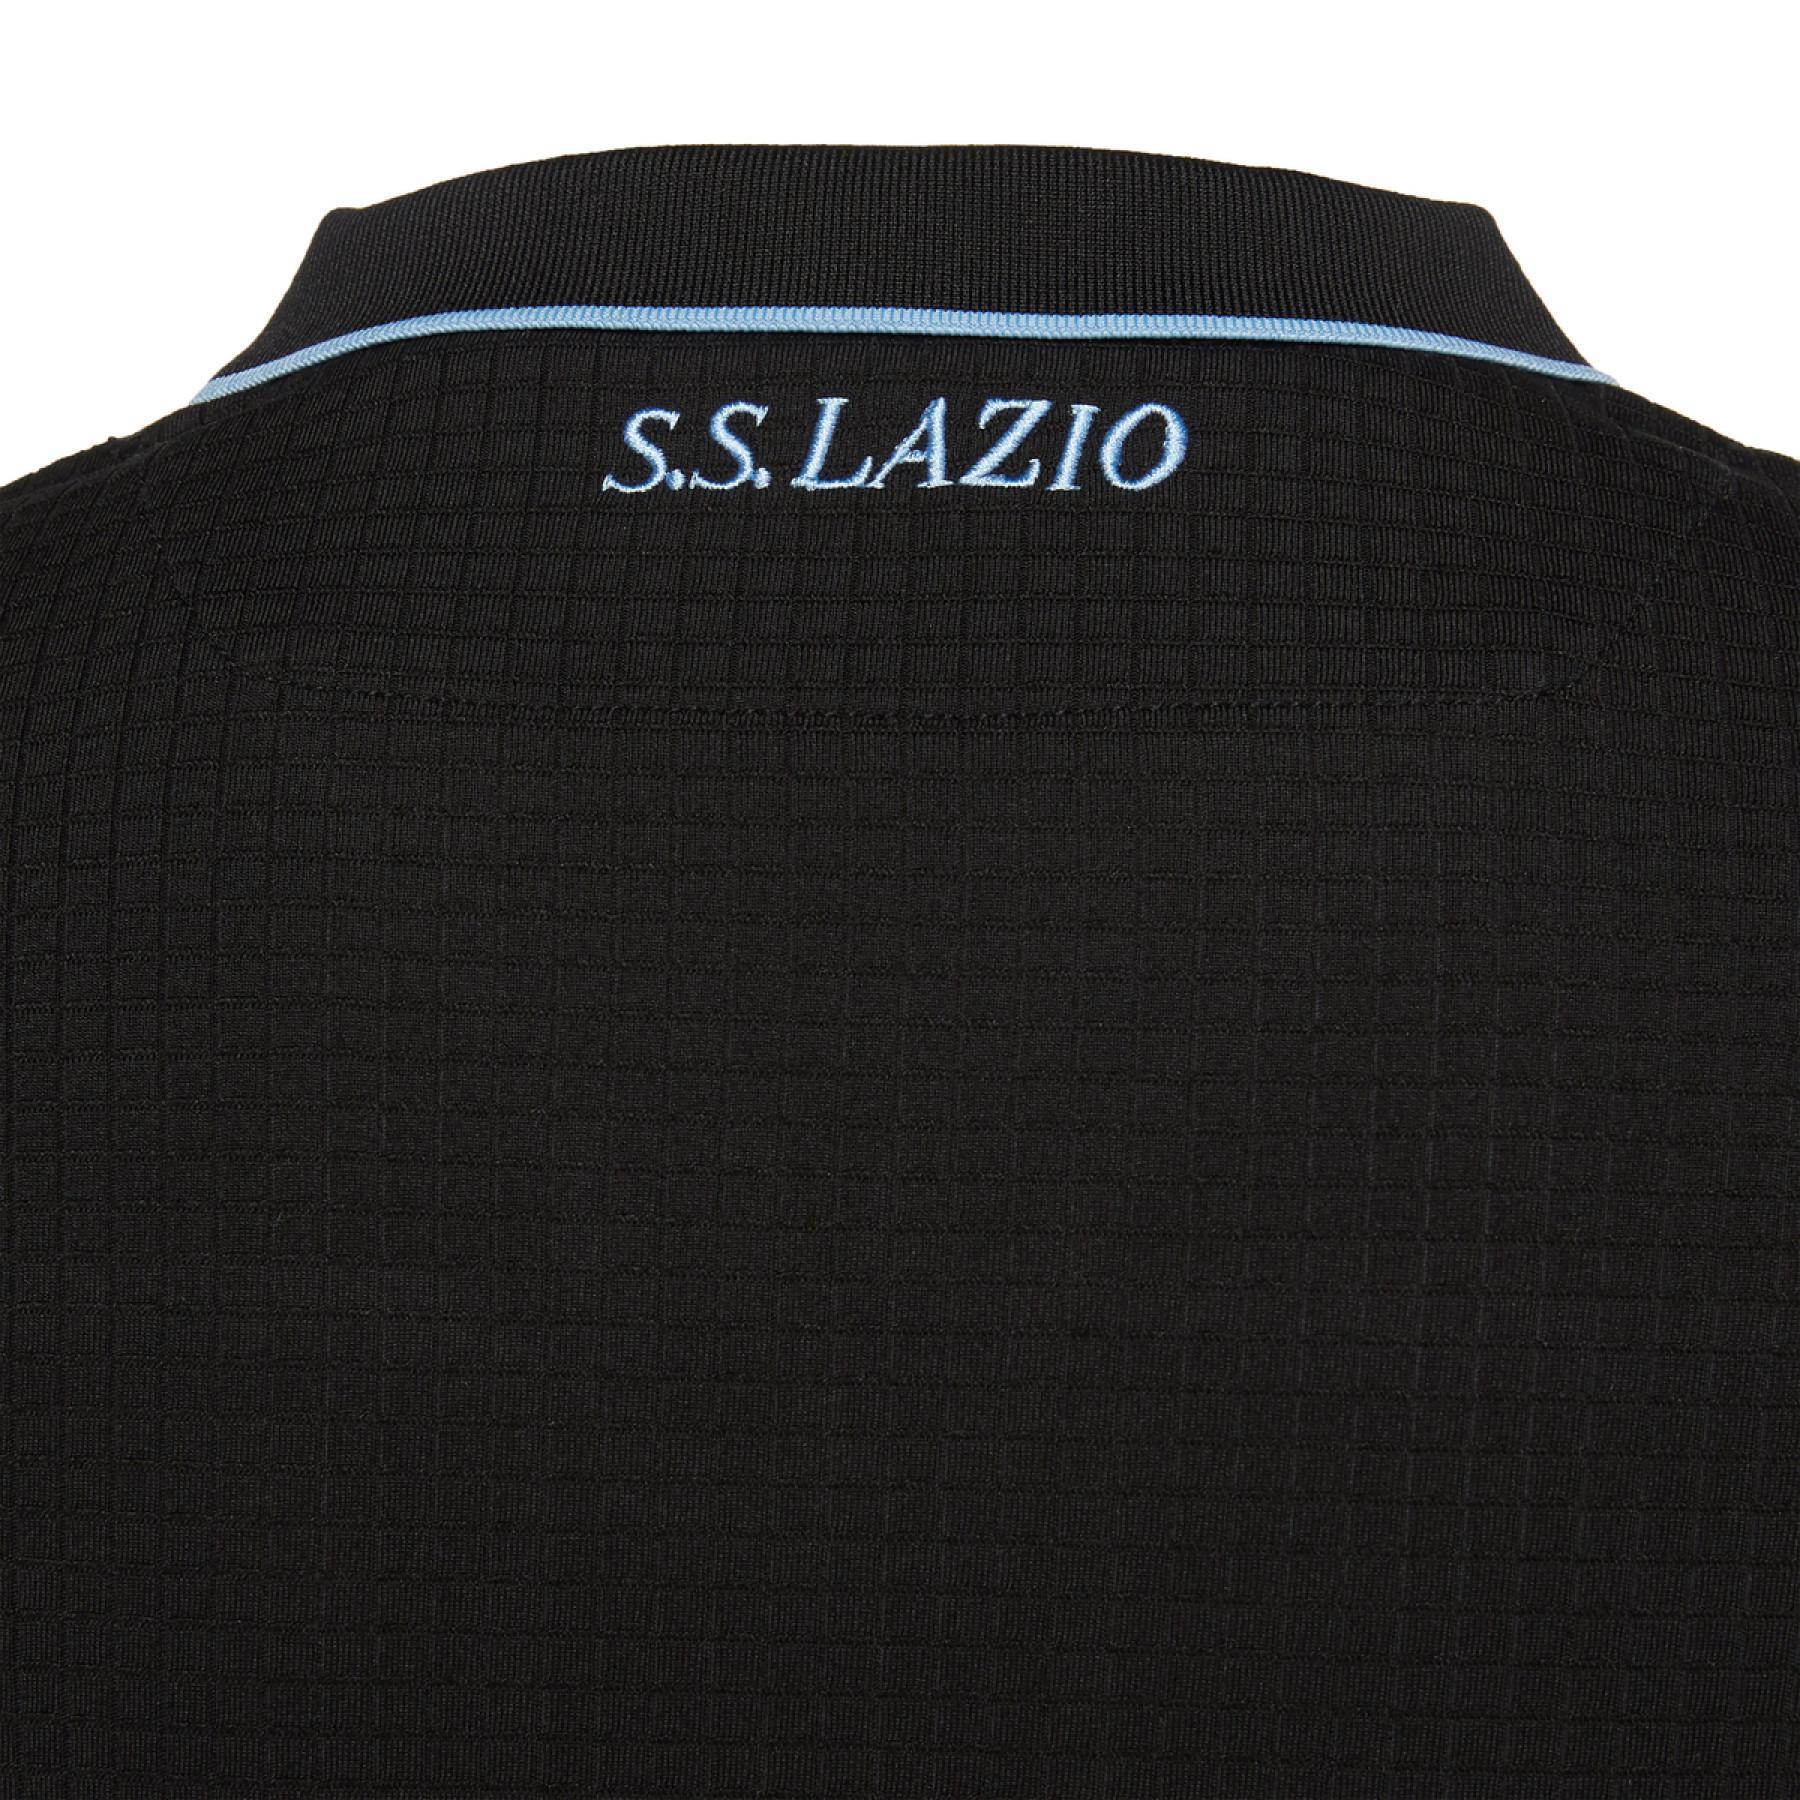 Long-sleeved goalkeeper jersey Lazio Rome 2019/20